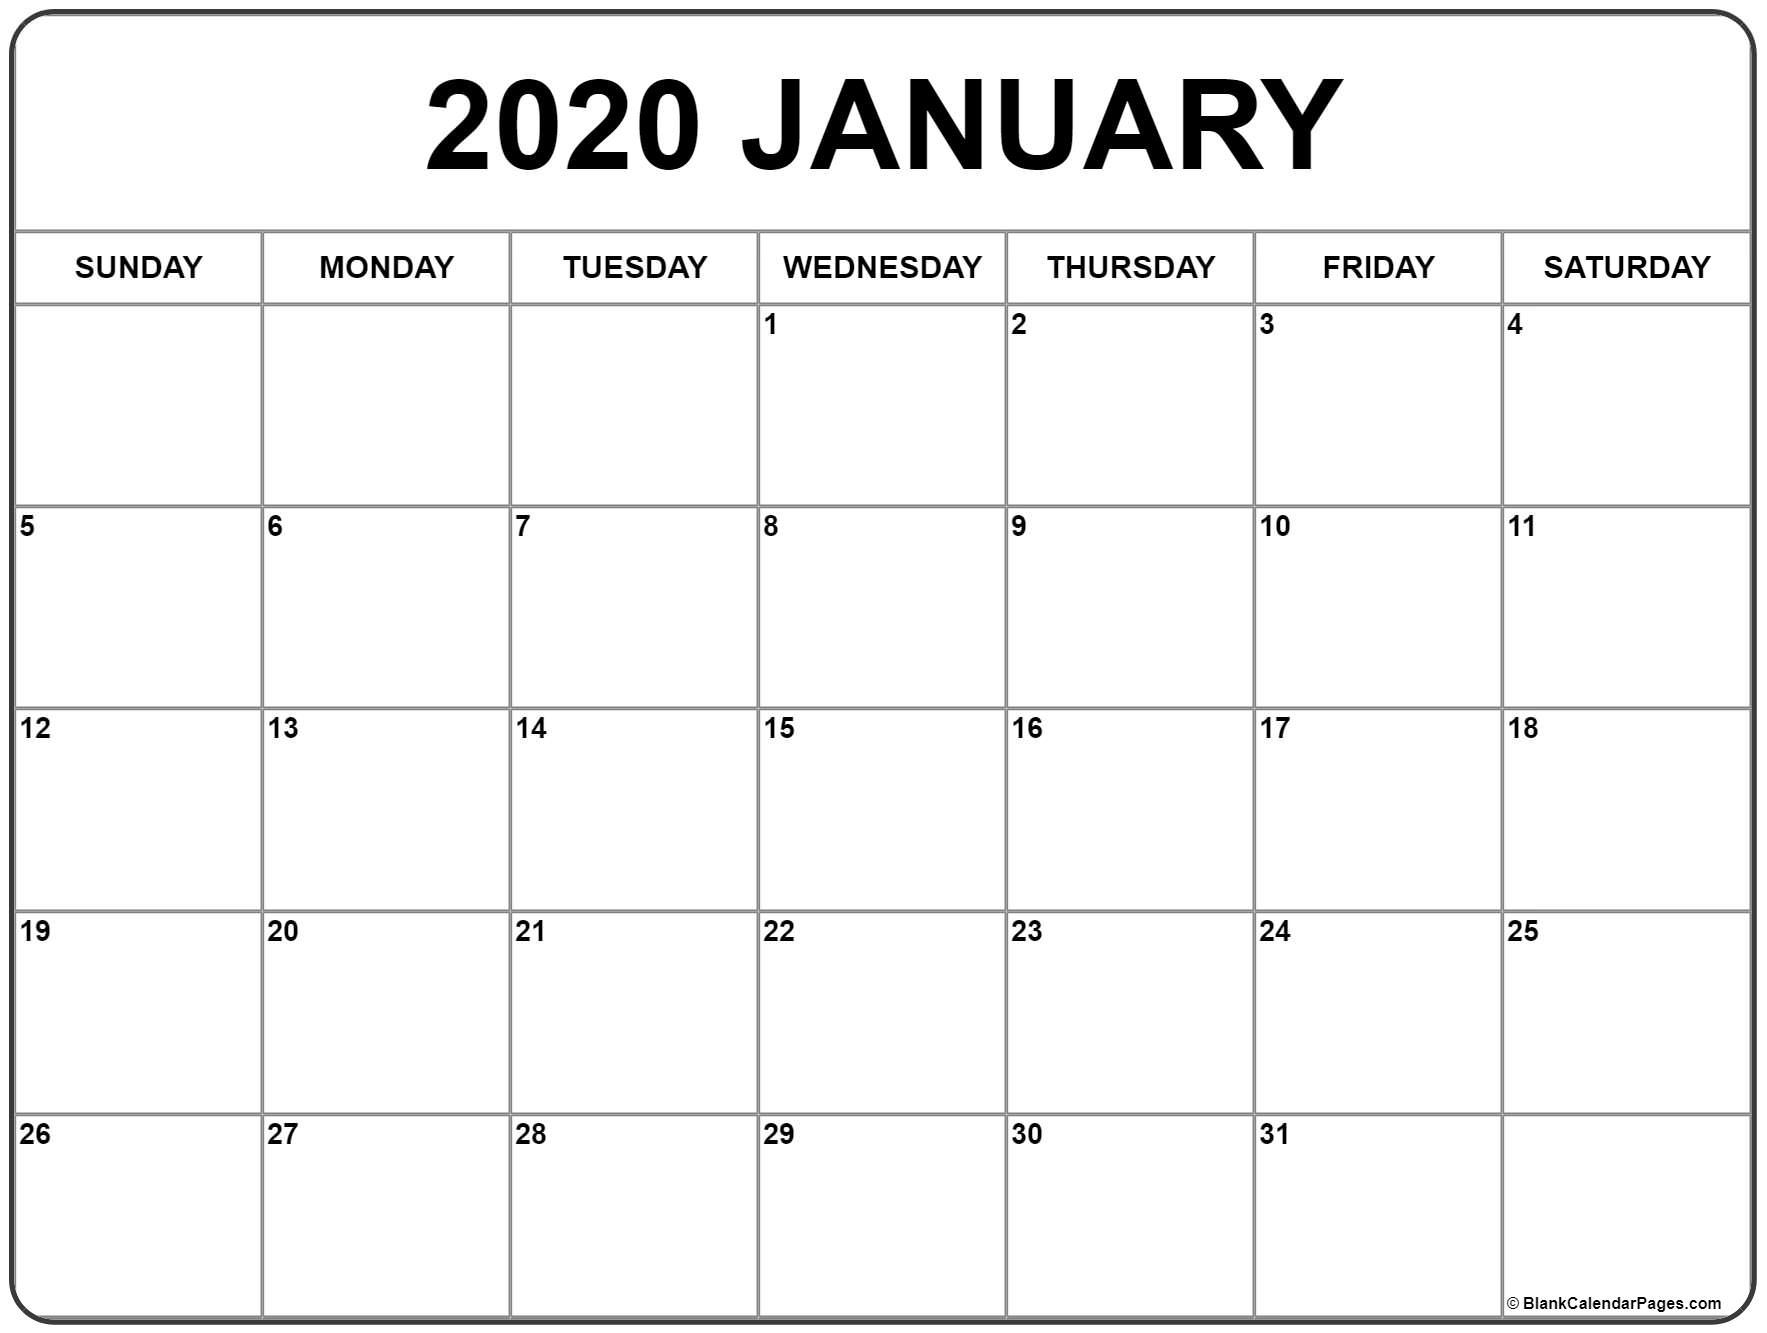 January 2020 Calendar | Free Printable Monthly Calendars-Printable January 2020 Calendar